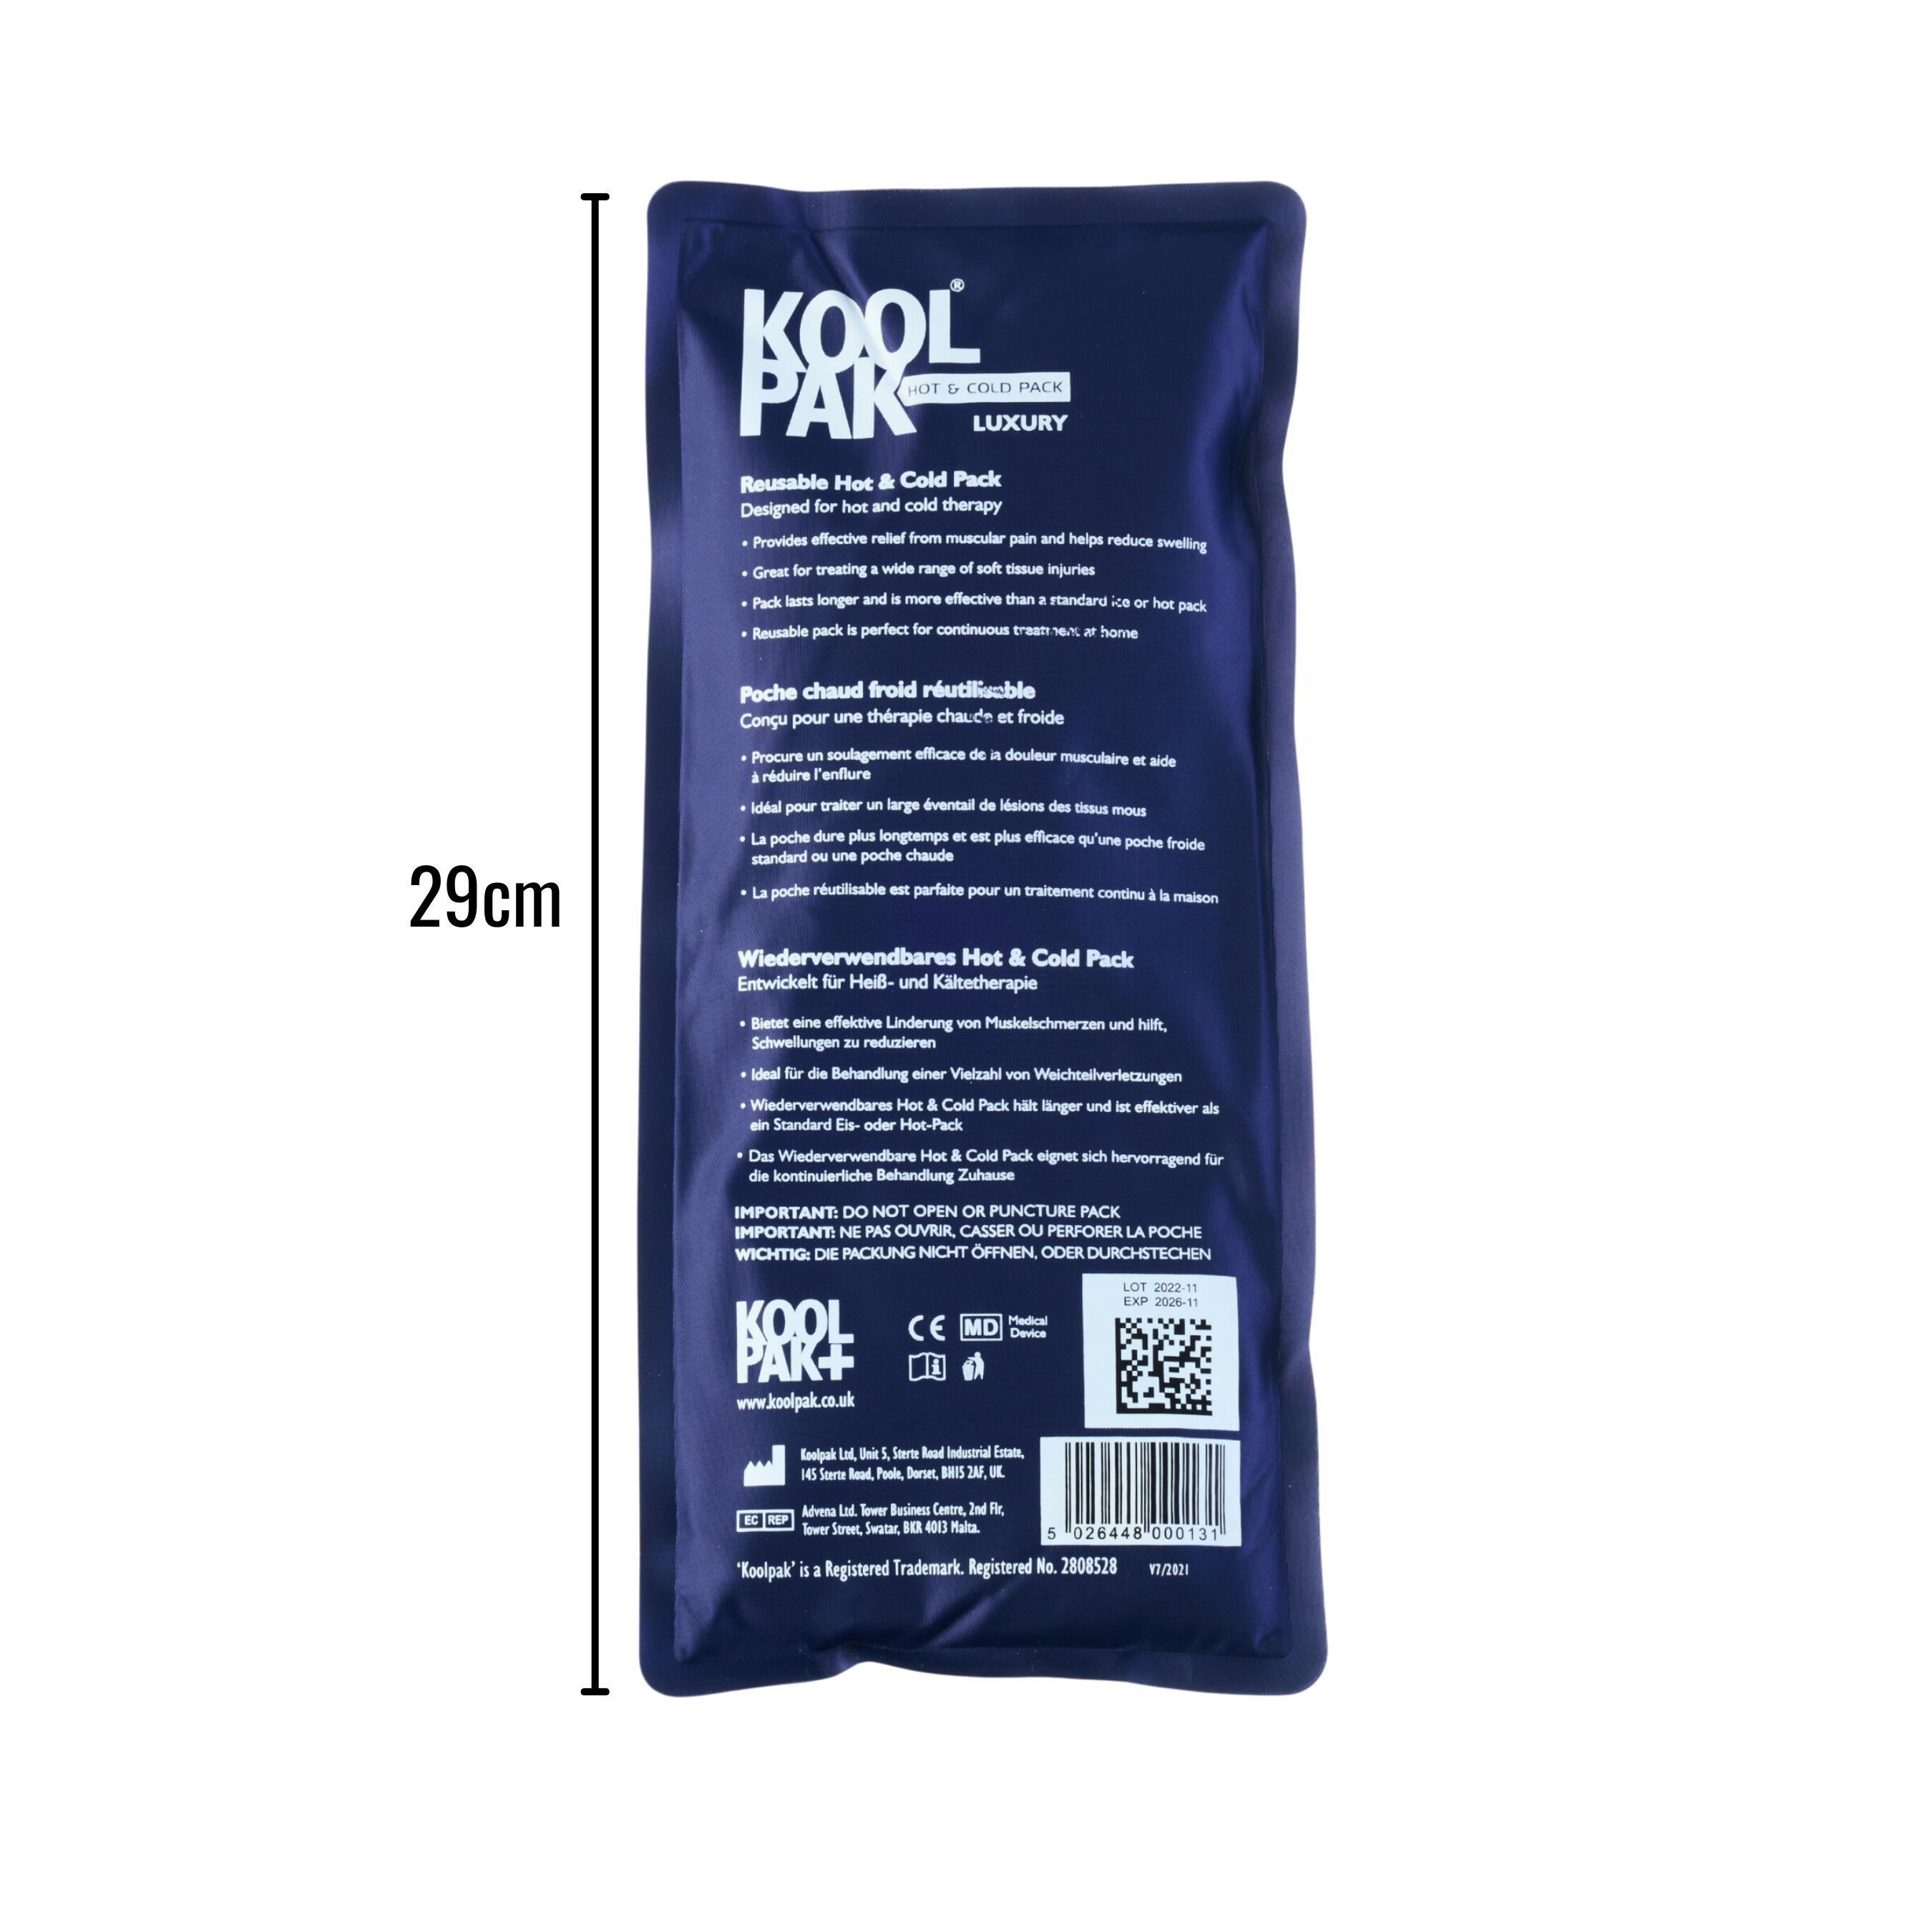 Koolpak Luxury Reusable Hot & Cold Pack - 12 X 29cm - Pack Of 20 4/5